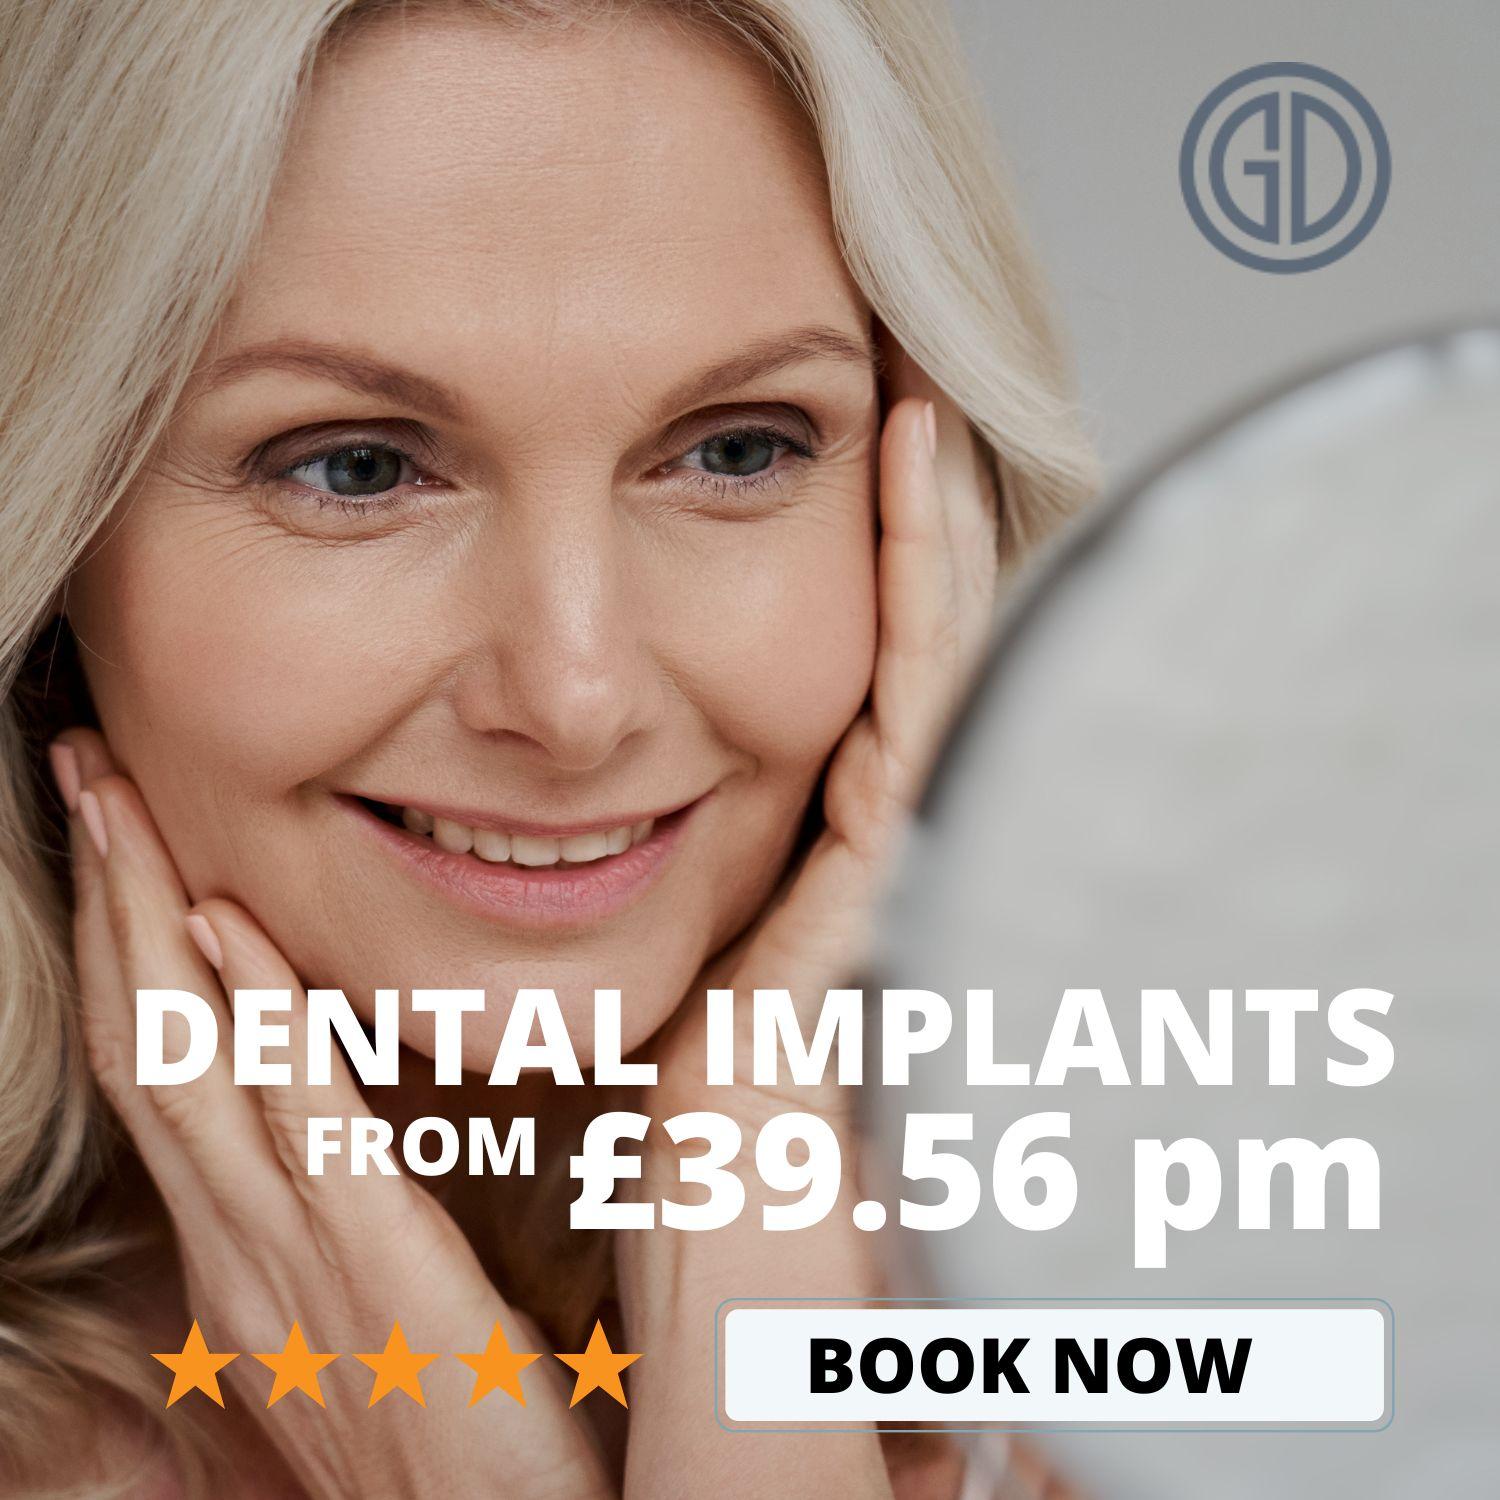 dental implant offer